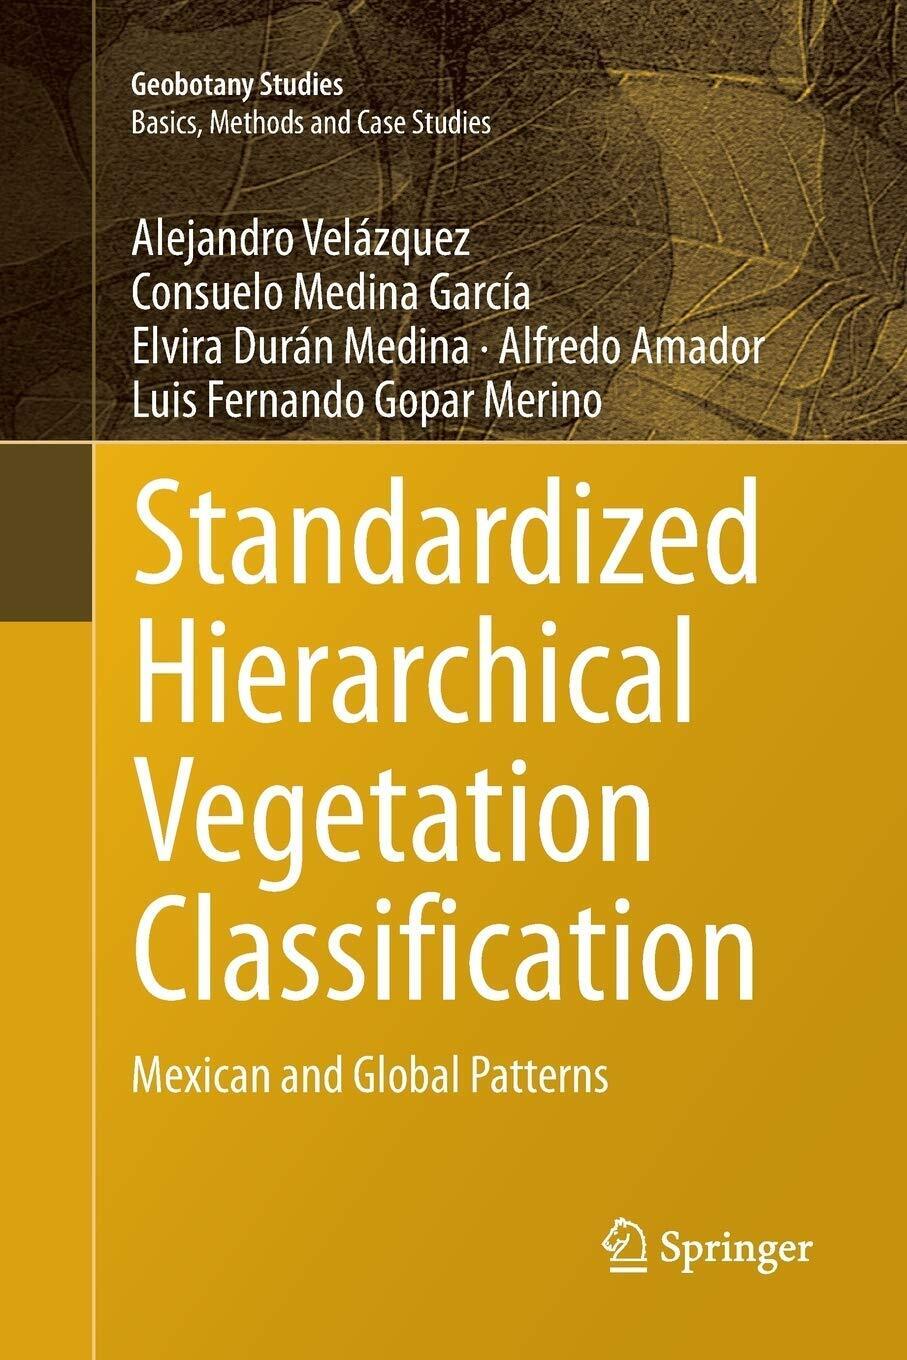 Standardized Hierarchical Vegetation Classification - Springer, 2018